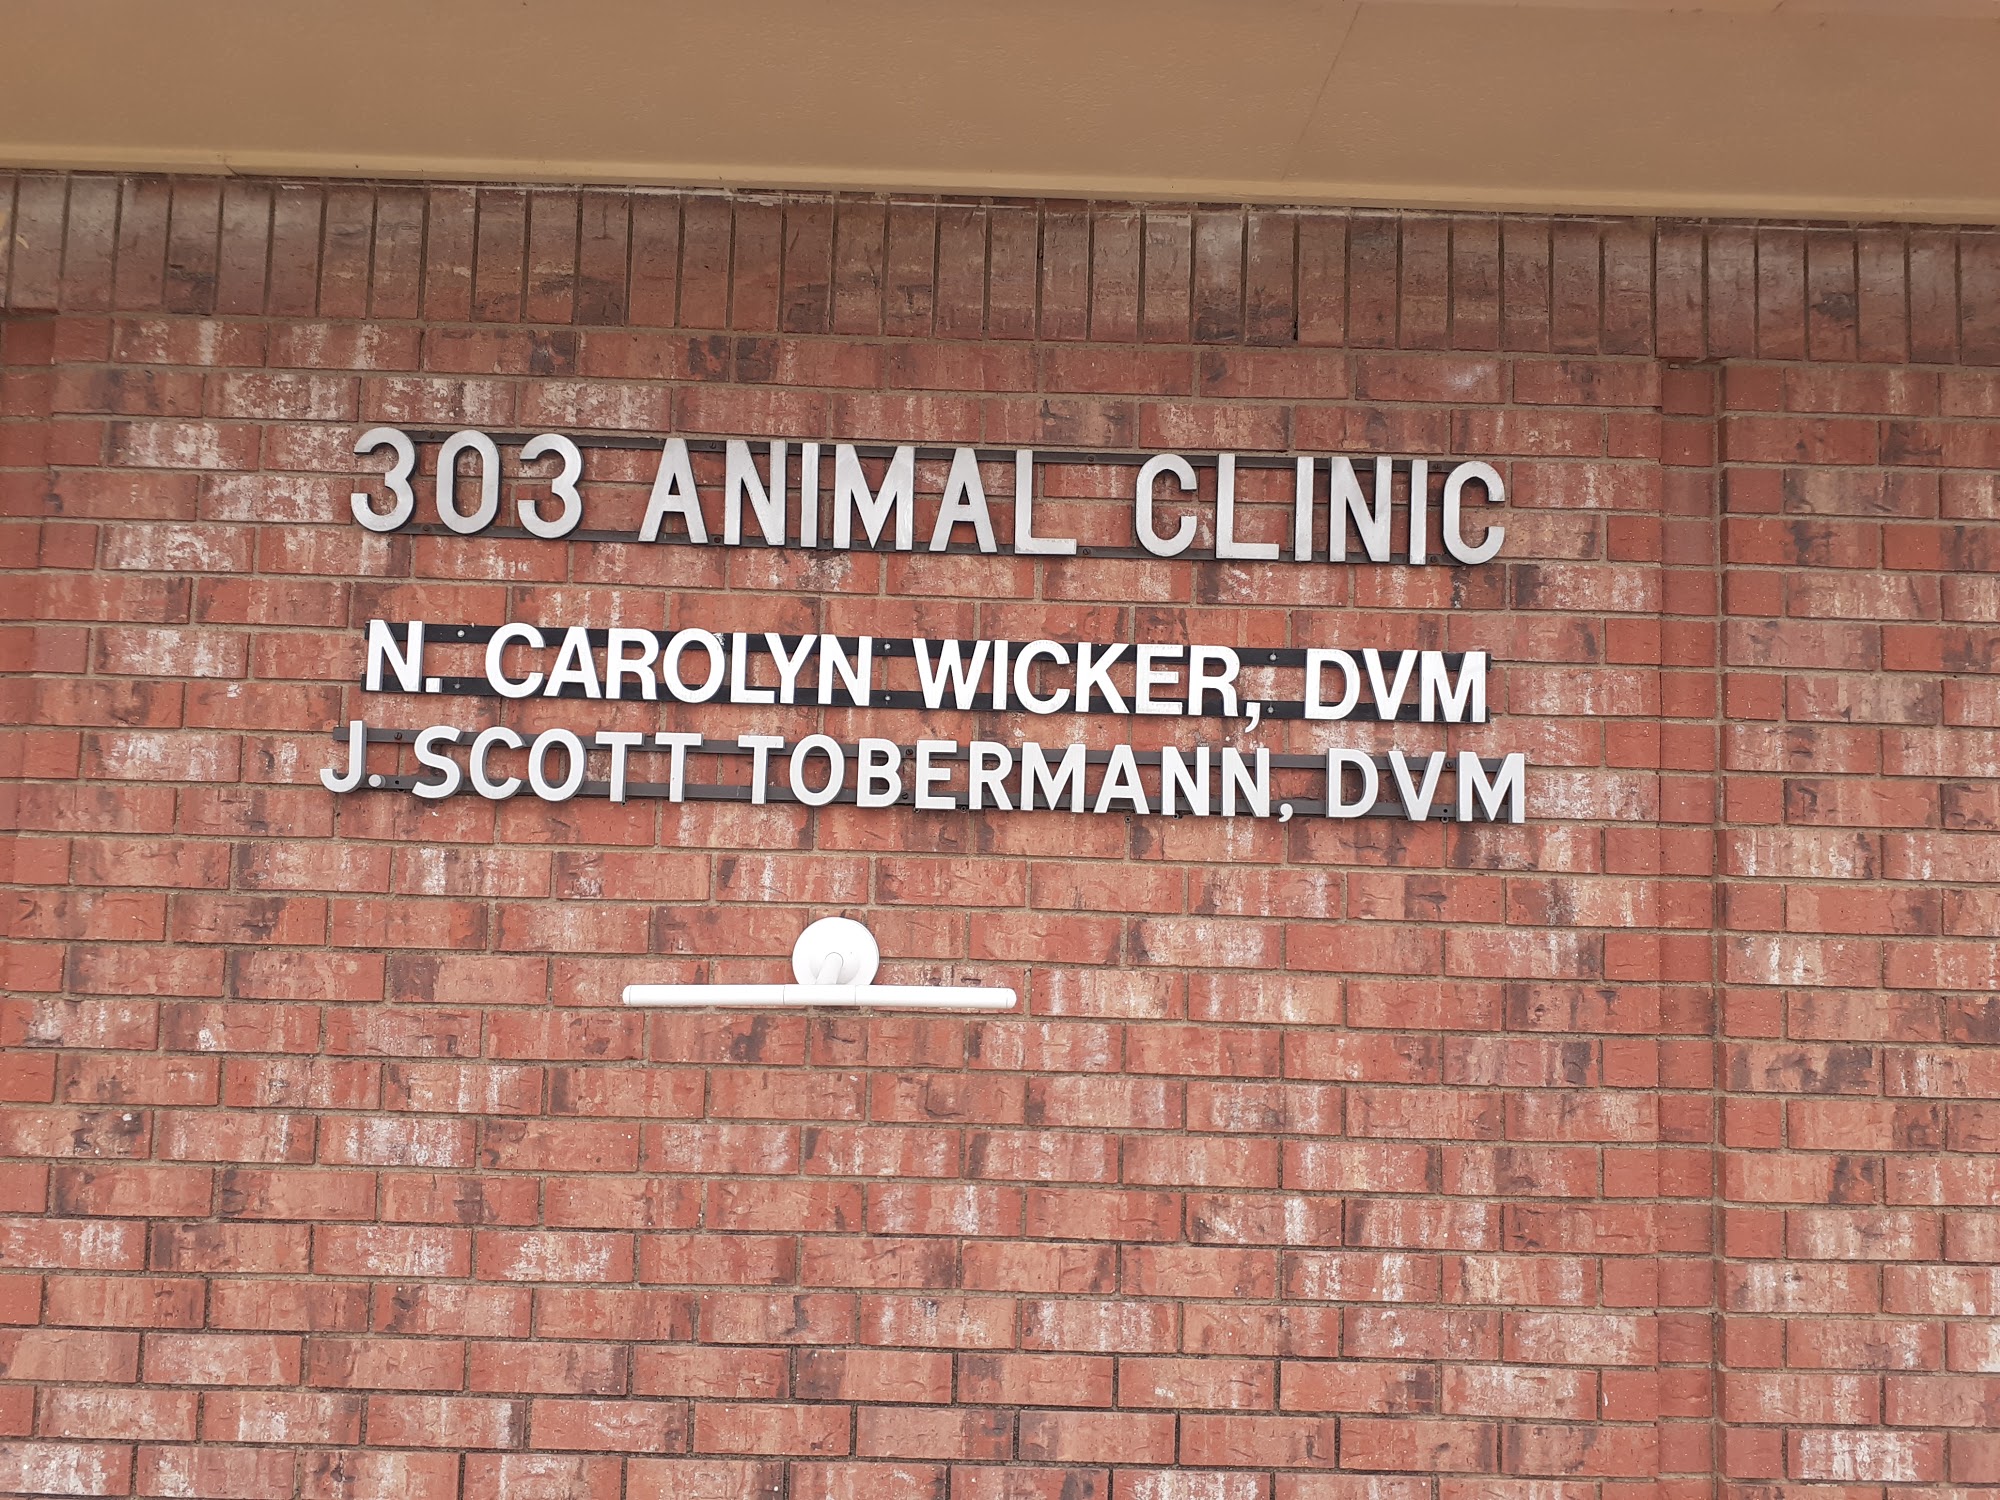 303 Animal Clinic